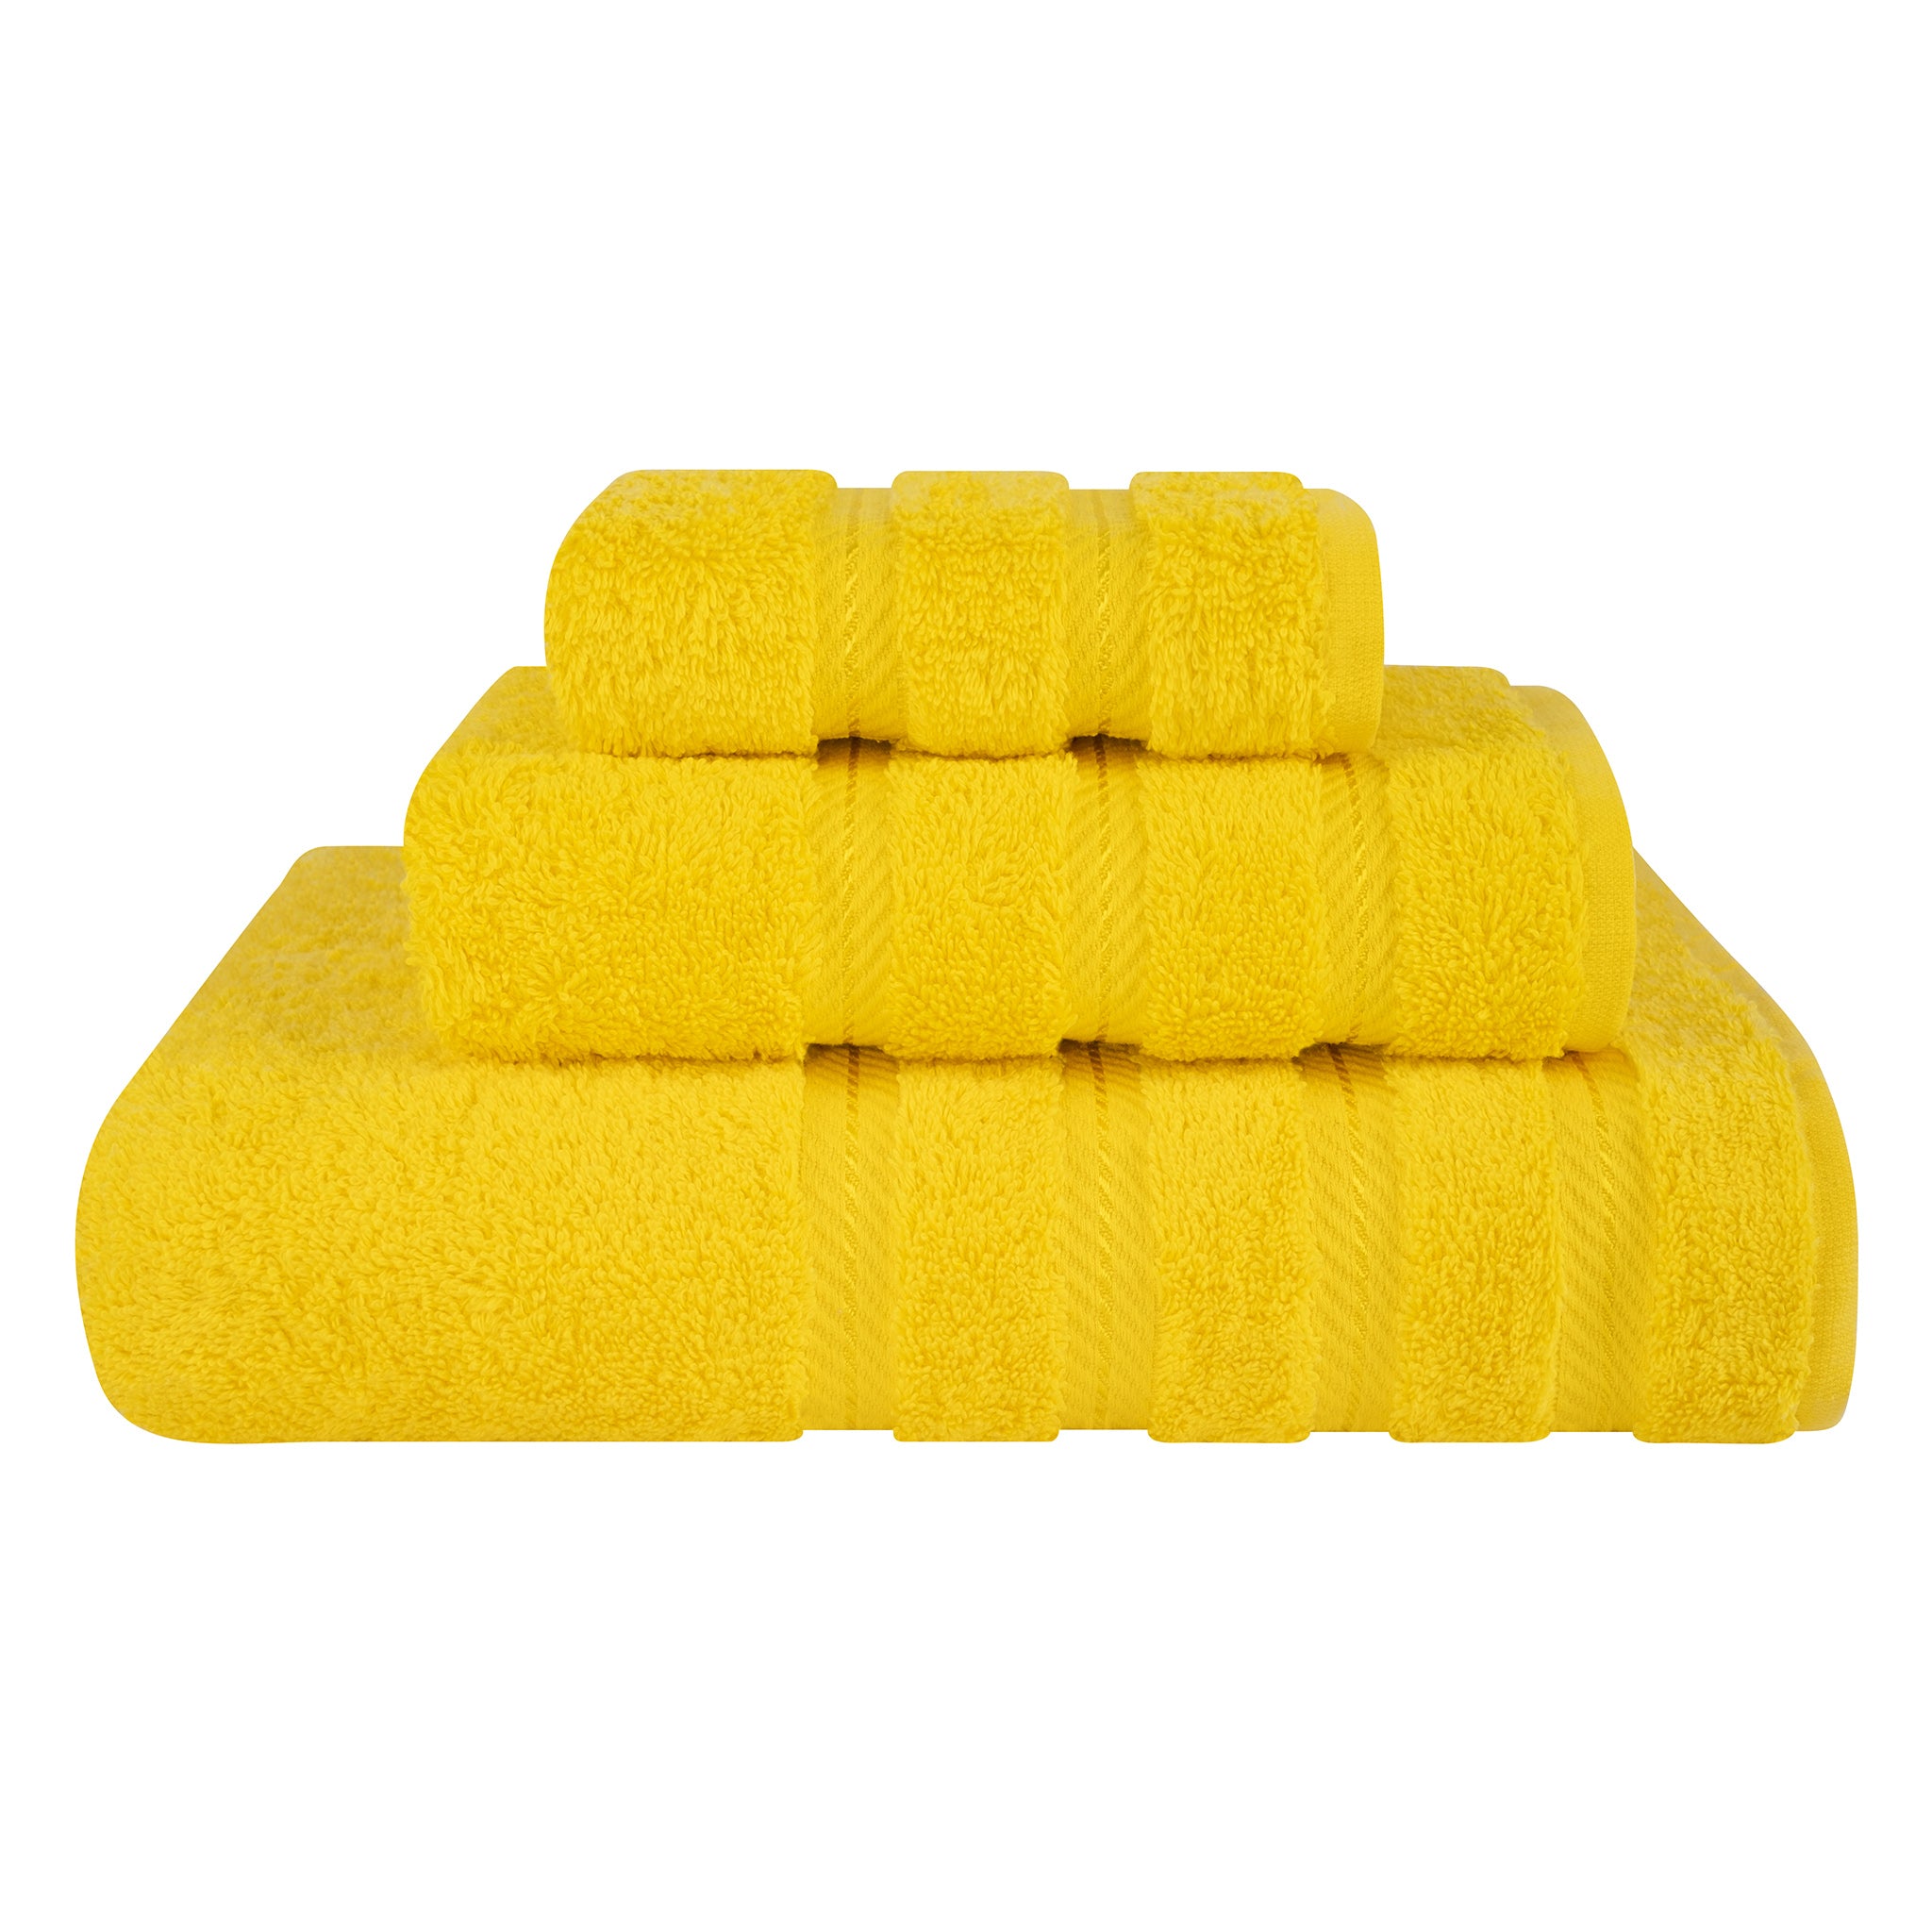 American Soft Linen 3 Piece Luxury Hotel Towel Set 20 set case pack yellow-1